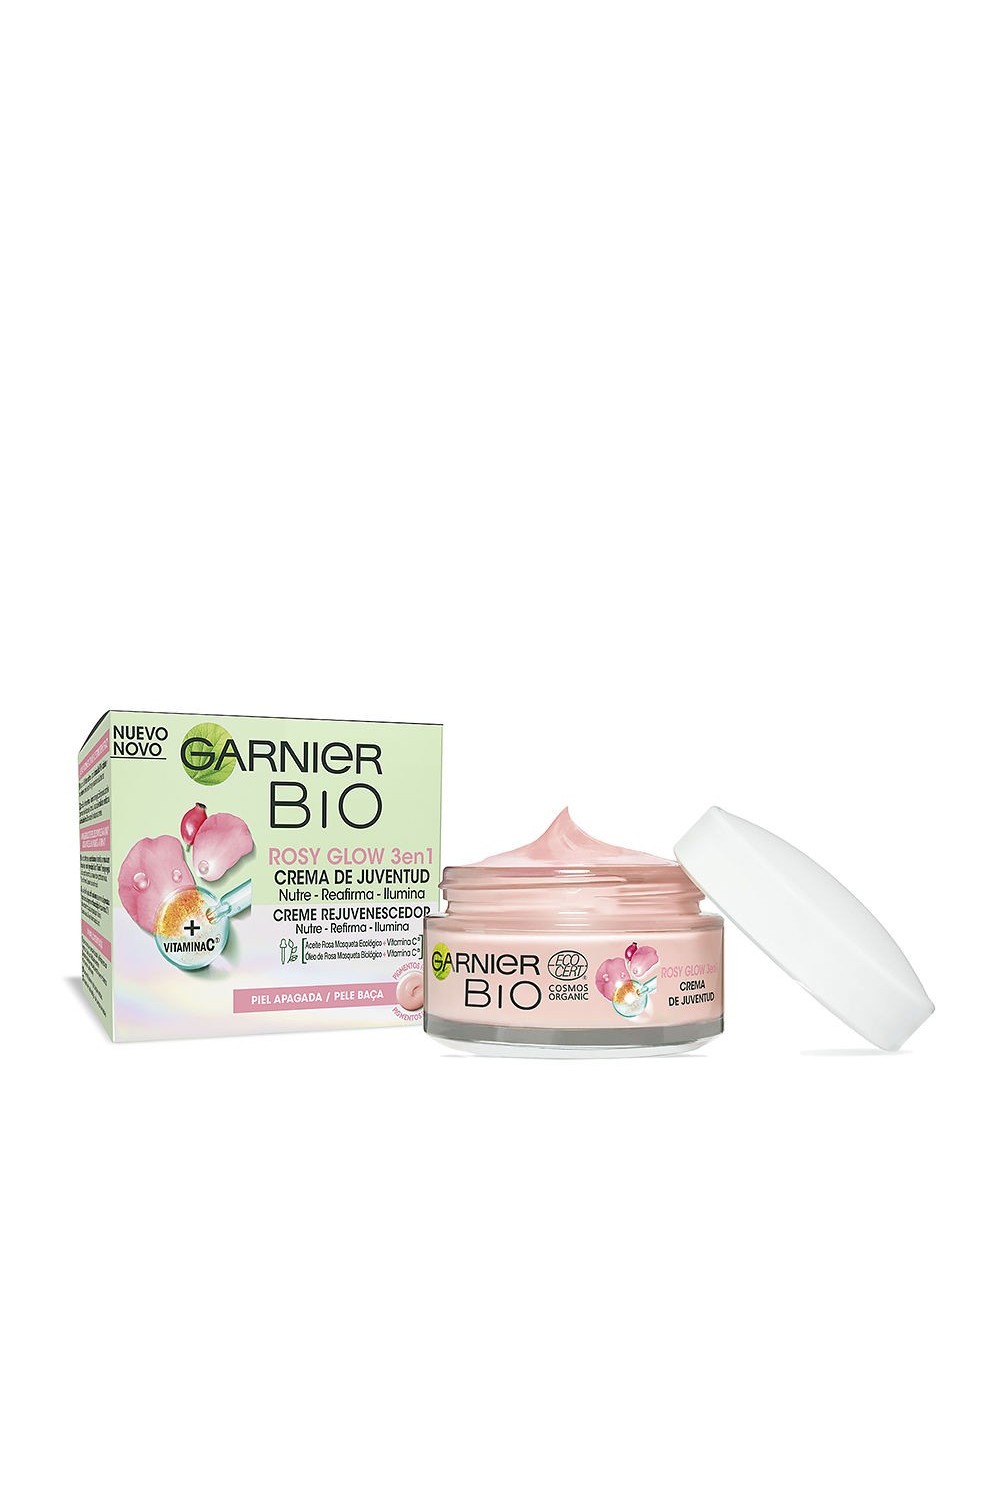 Garnier Bio Rosy Glow 3 In 1 Youth Cream 50ml